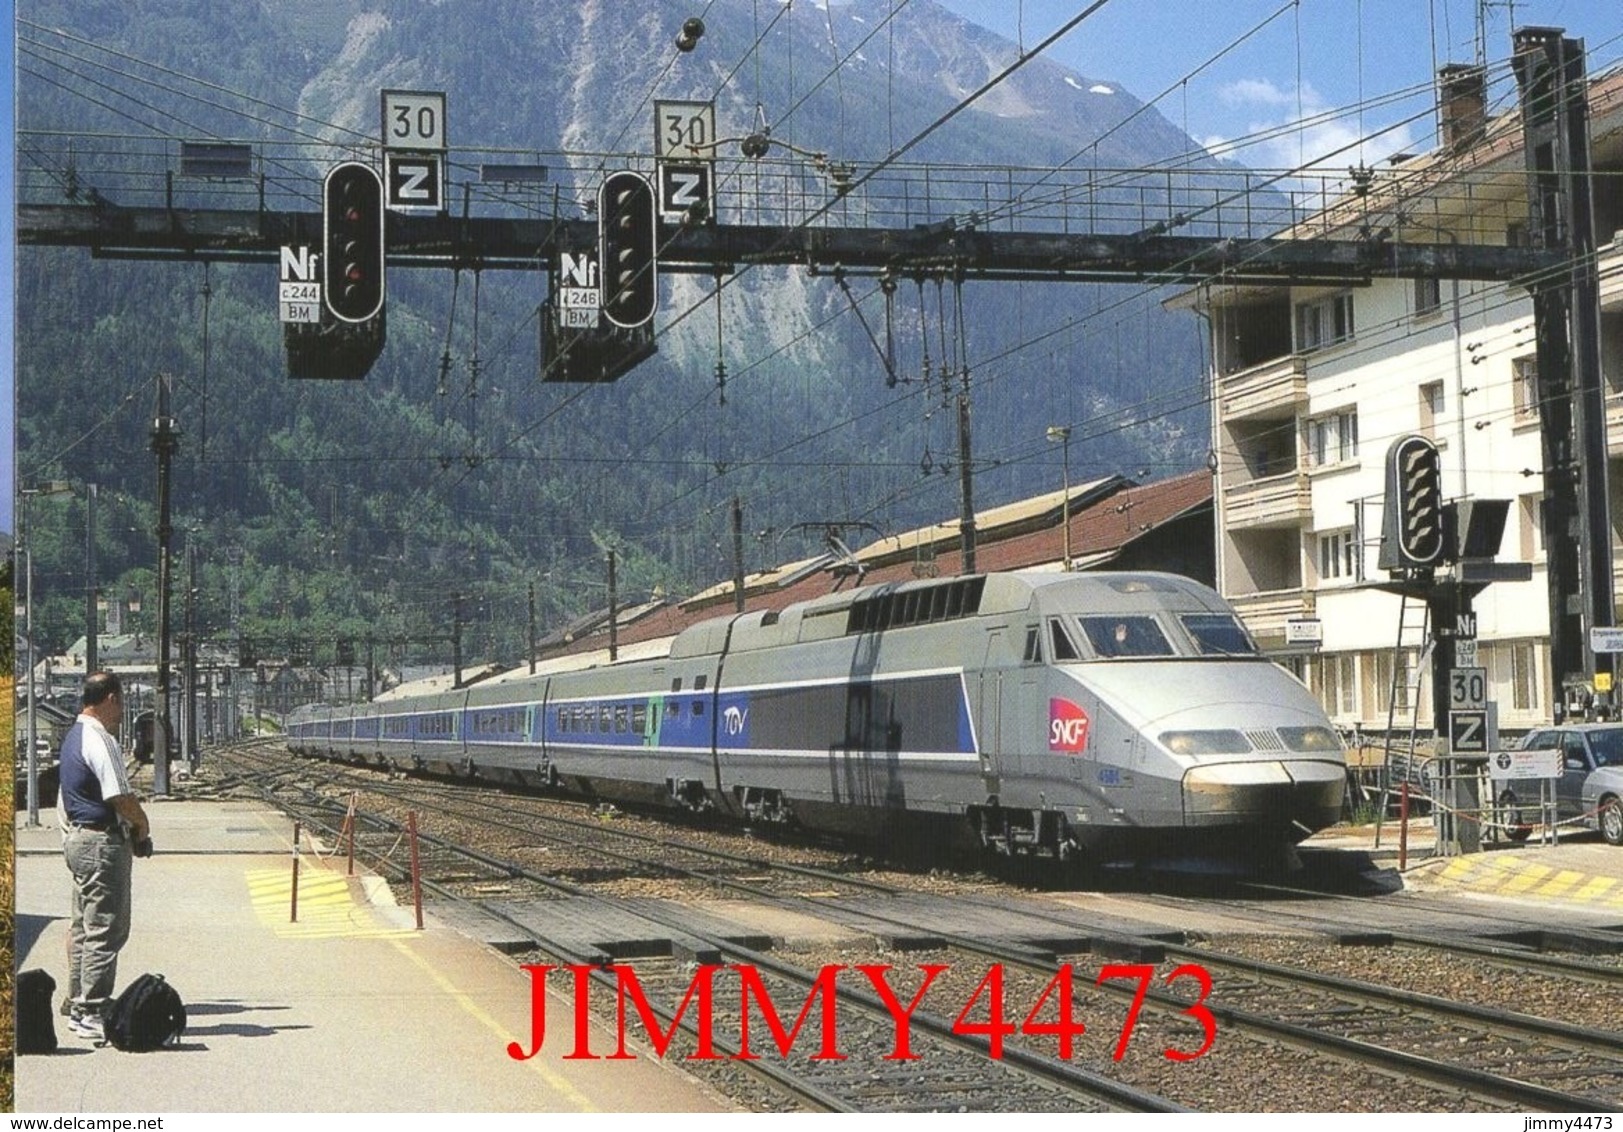 CPM - Le TGV - R. Rame 4504 " Alessandro Manzoni " Paris-Lyon-Milano En Gare De Modane (73)  - Photo R. GIBIAT - - Gares - Avec Trains